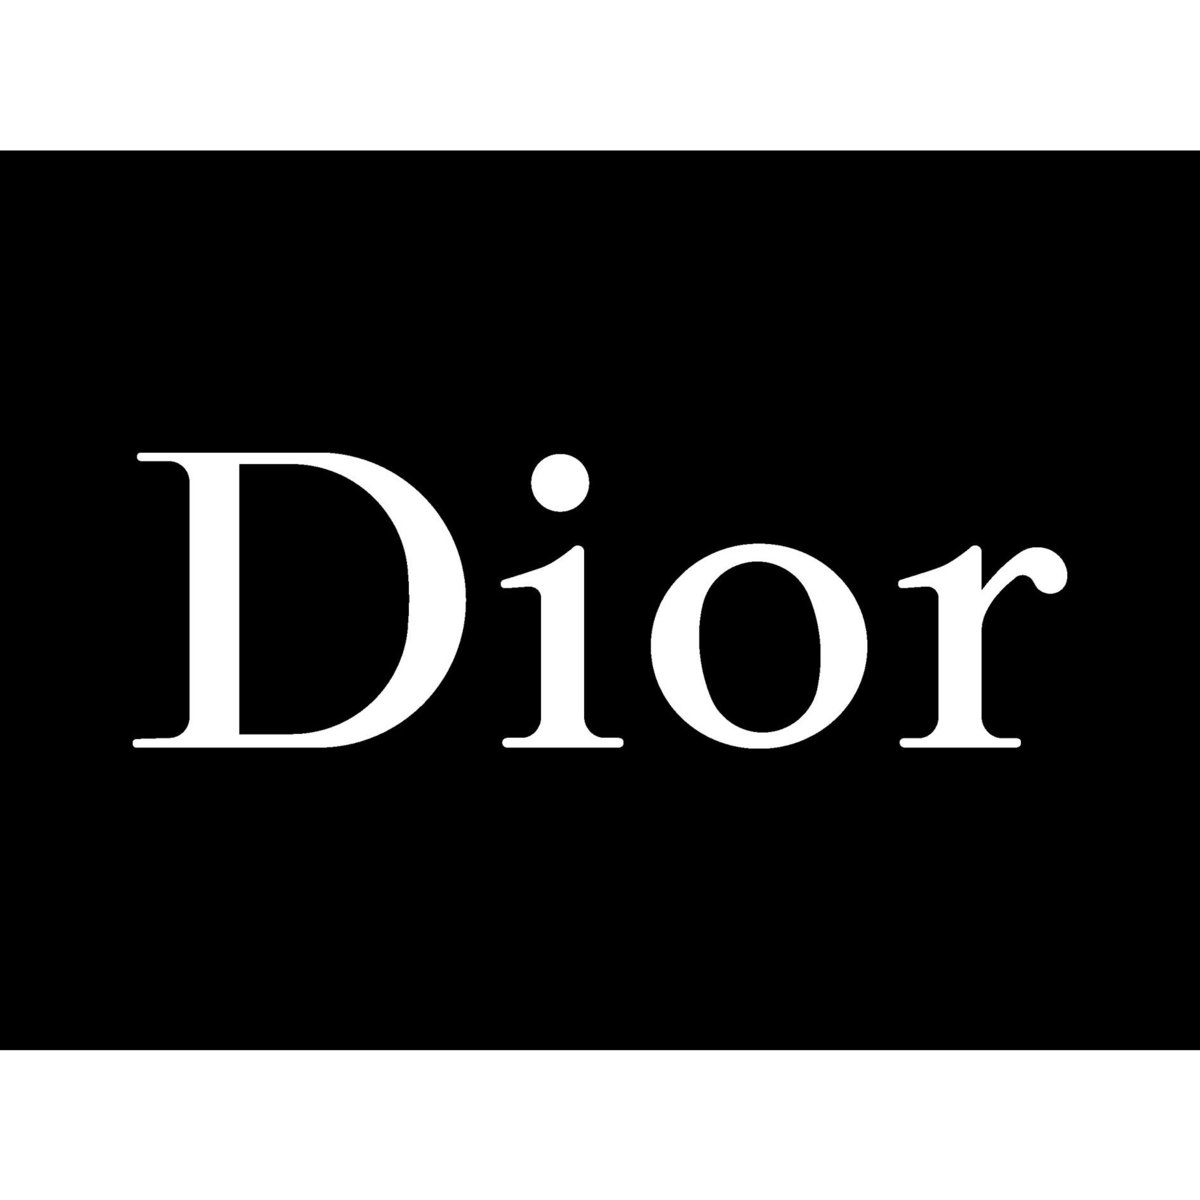 Dior-Sticker-thermocollant-Blanc_1200x1200